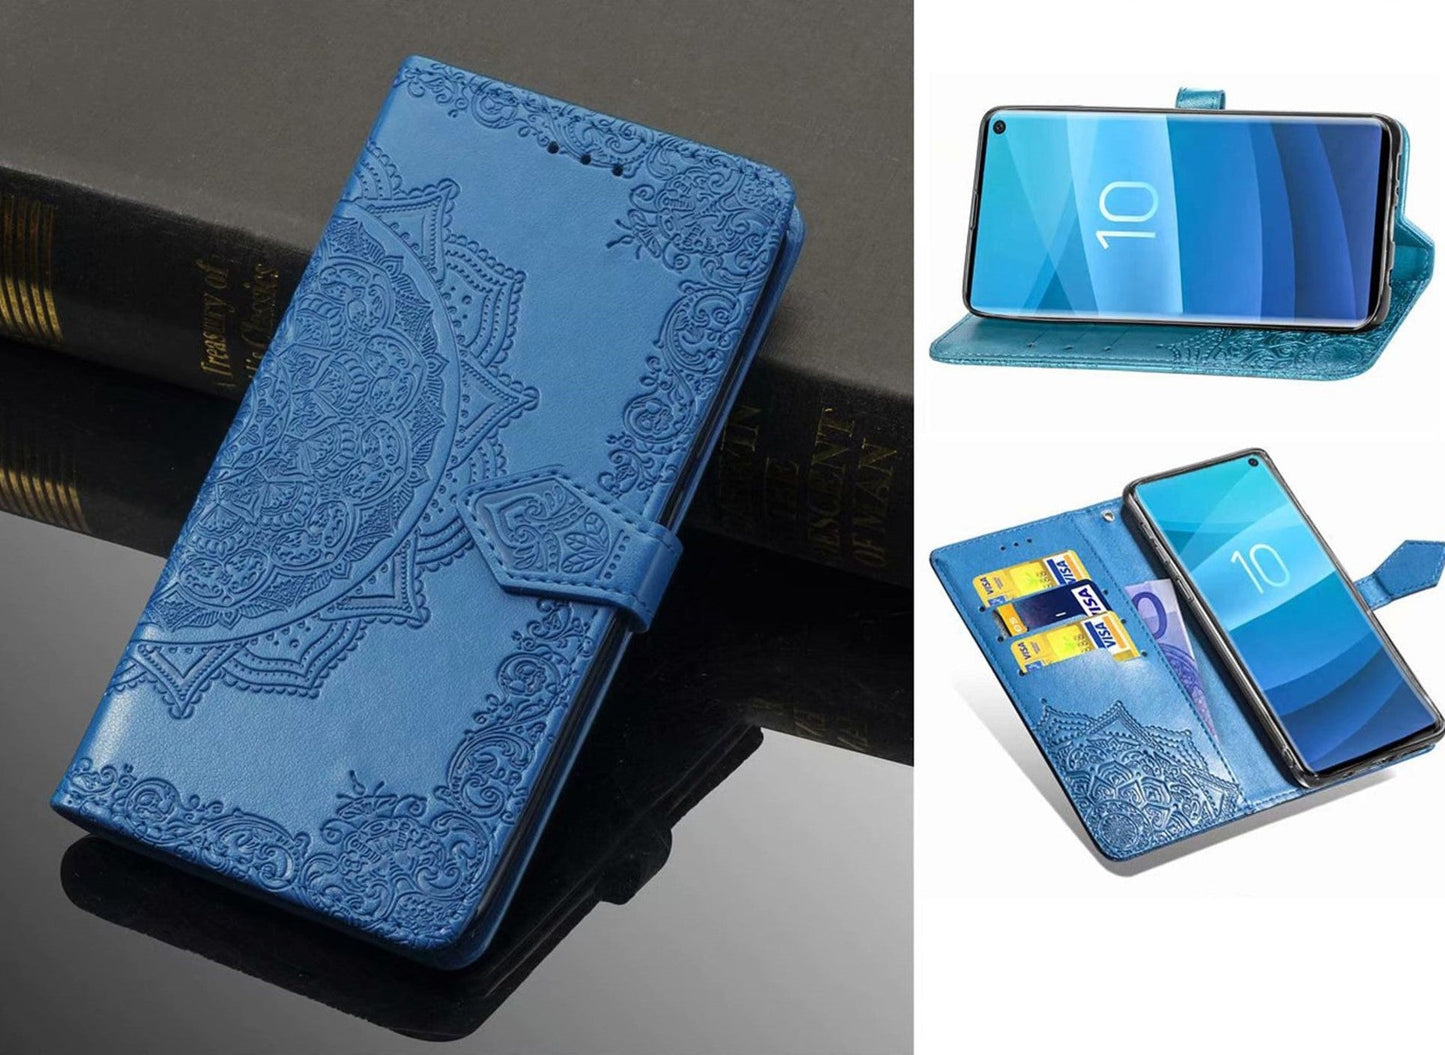 Samsung Galaxy J4 Case Wallet Cover Blue